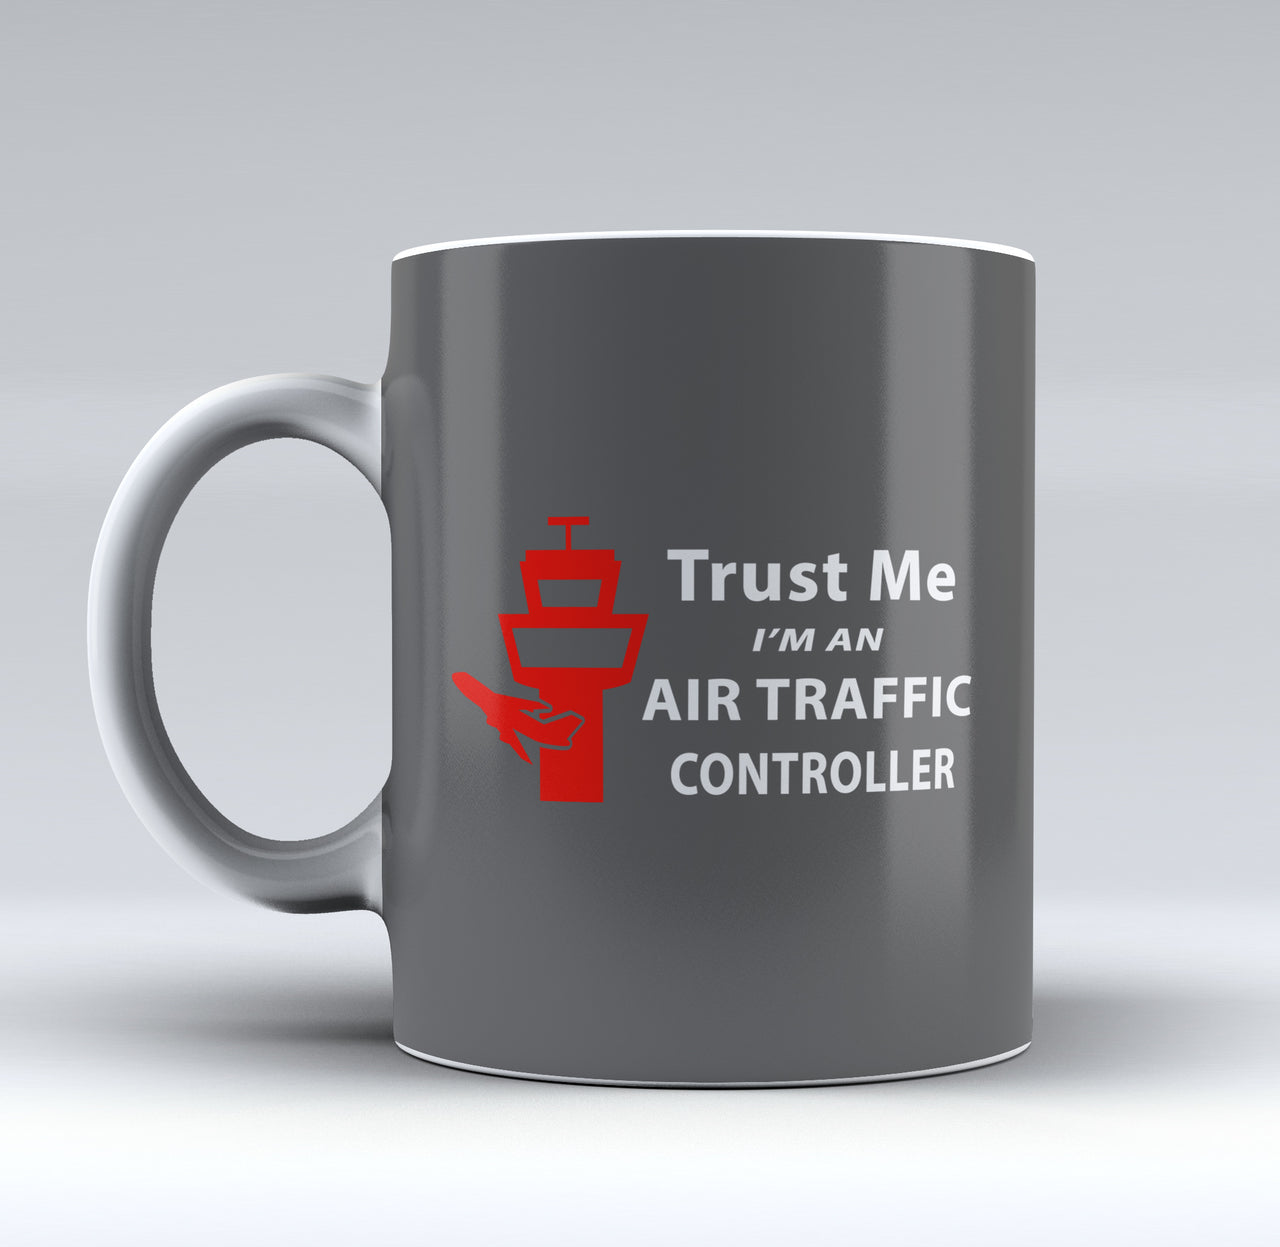 Trust Me I'm an Air Traffic Controller Designed Mugs